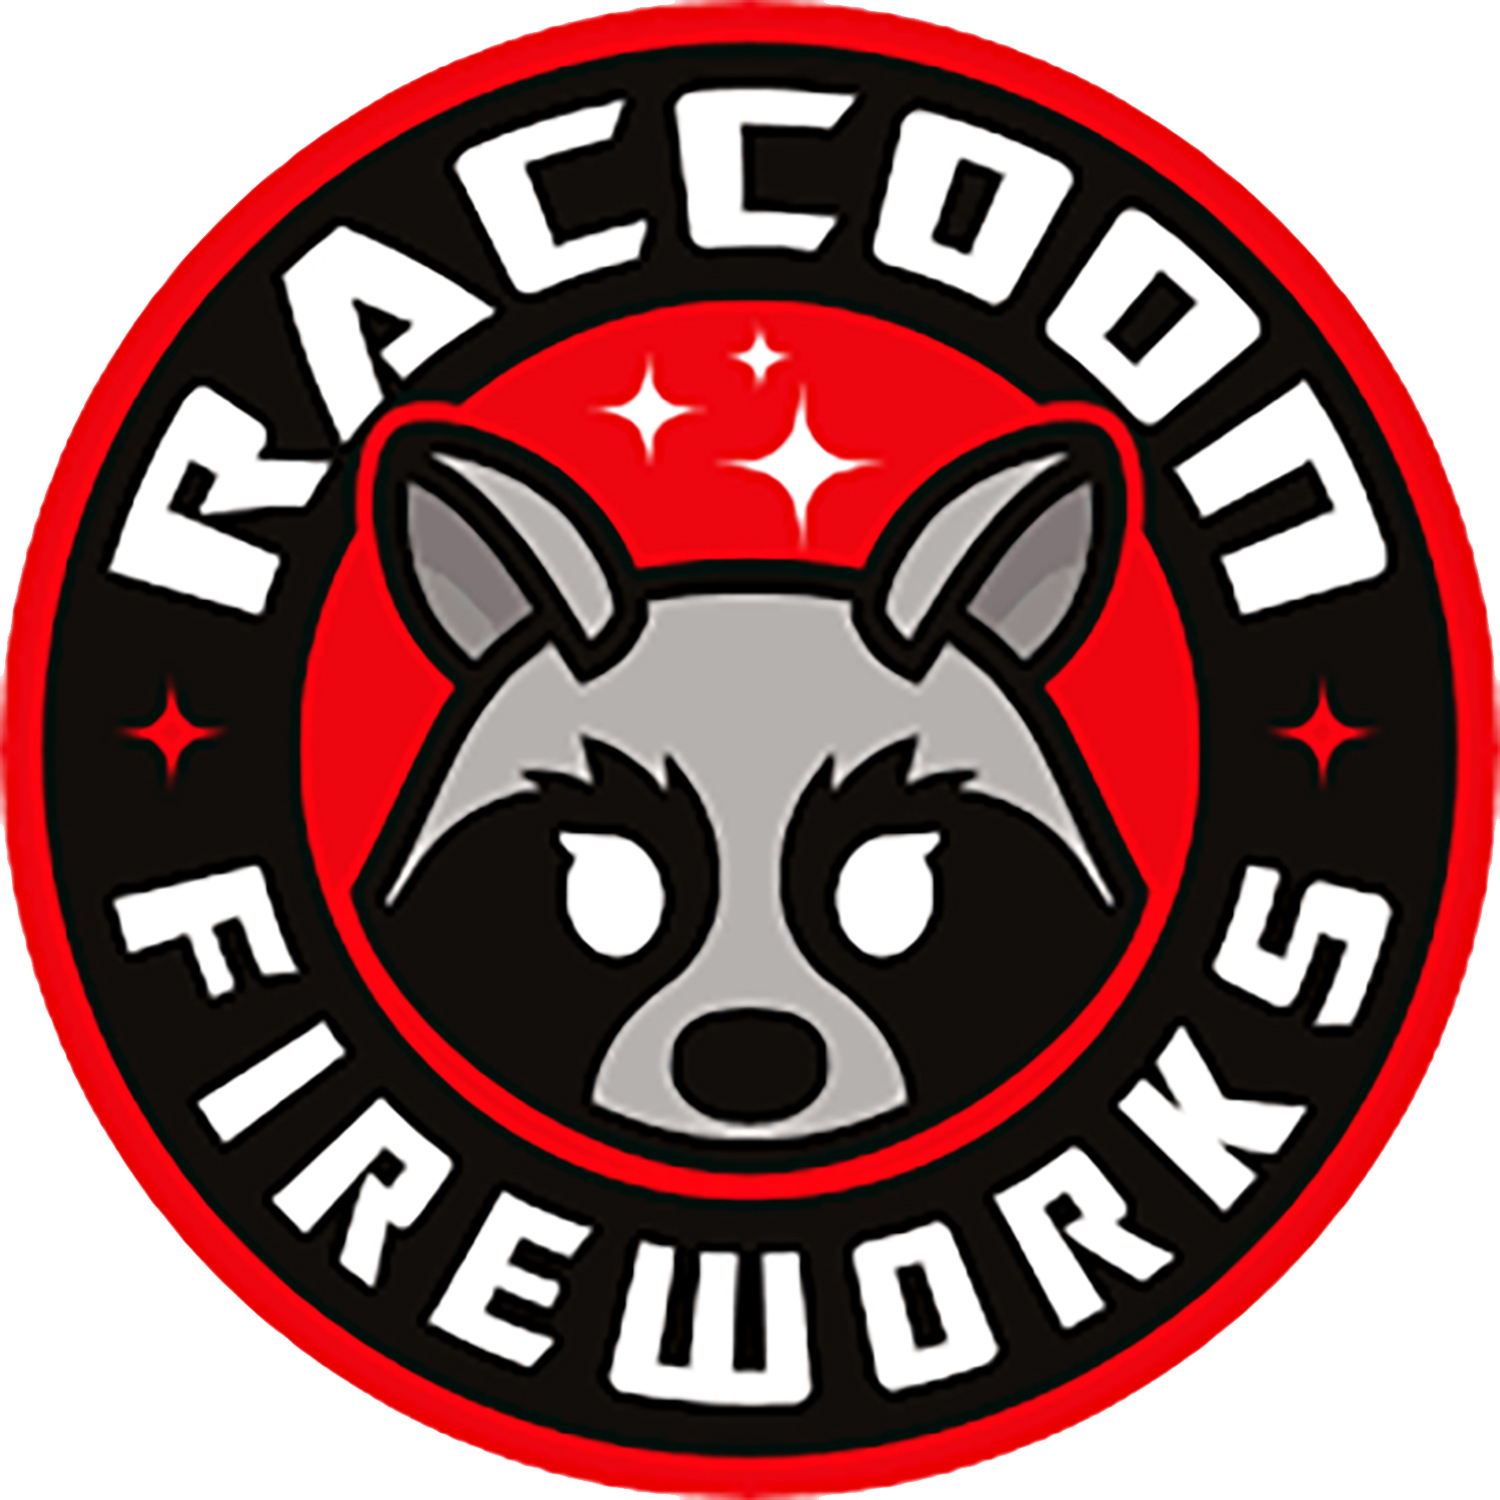 Raccoon Fireworks